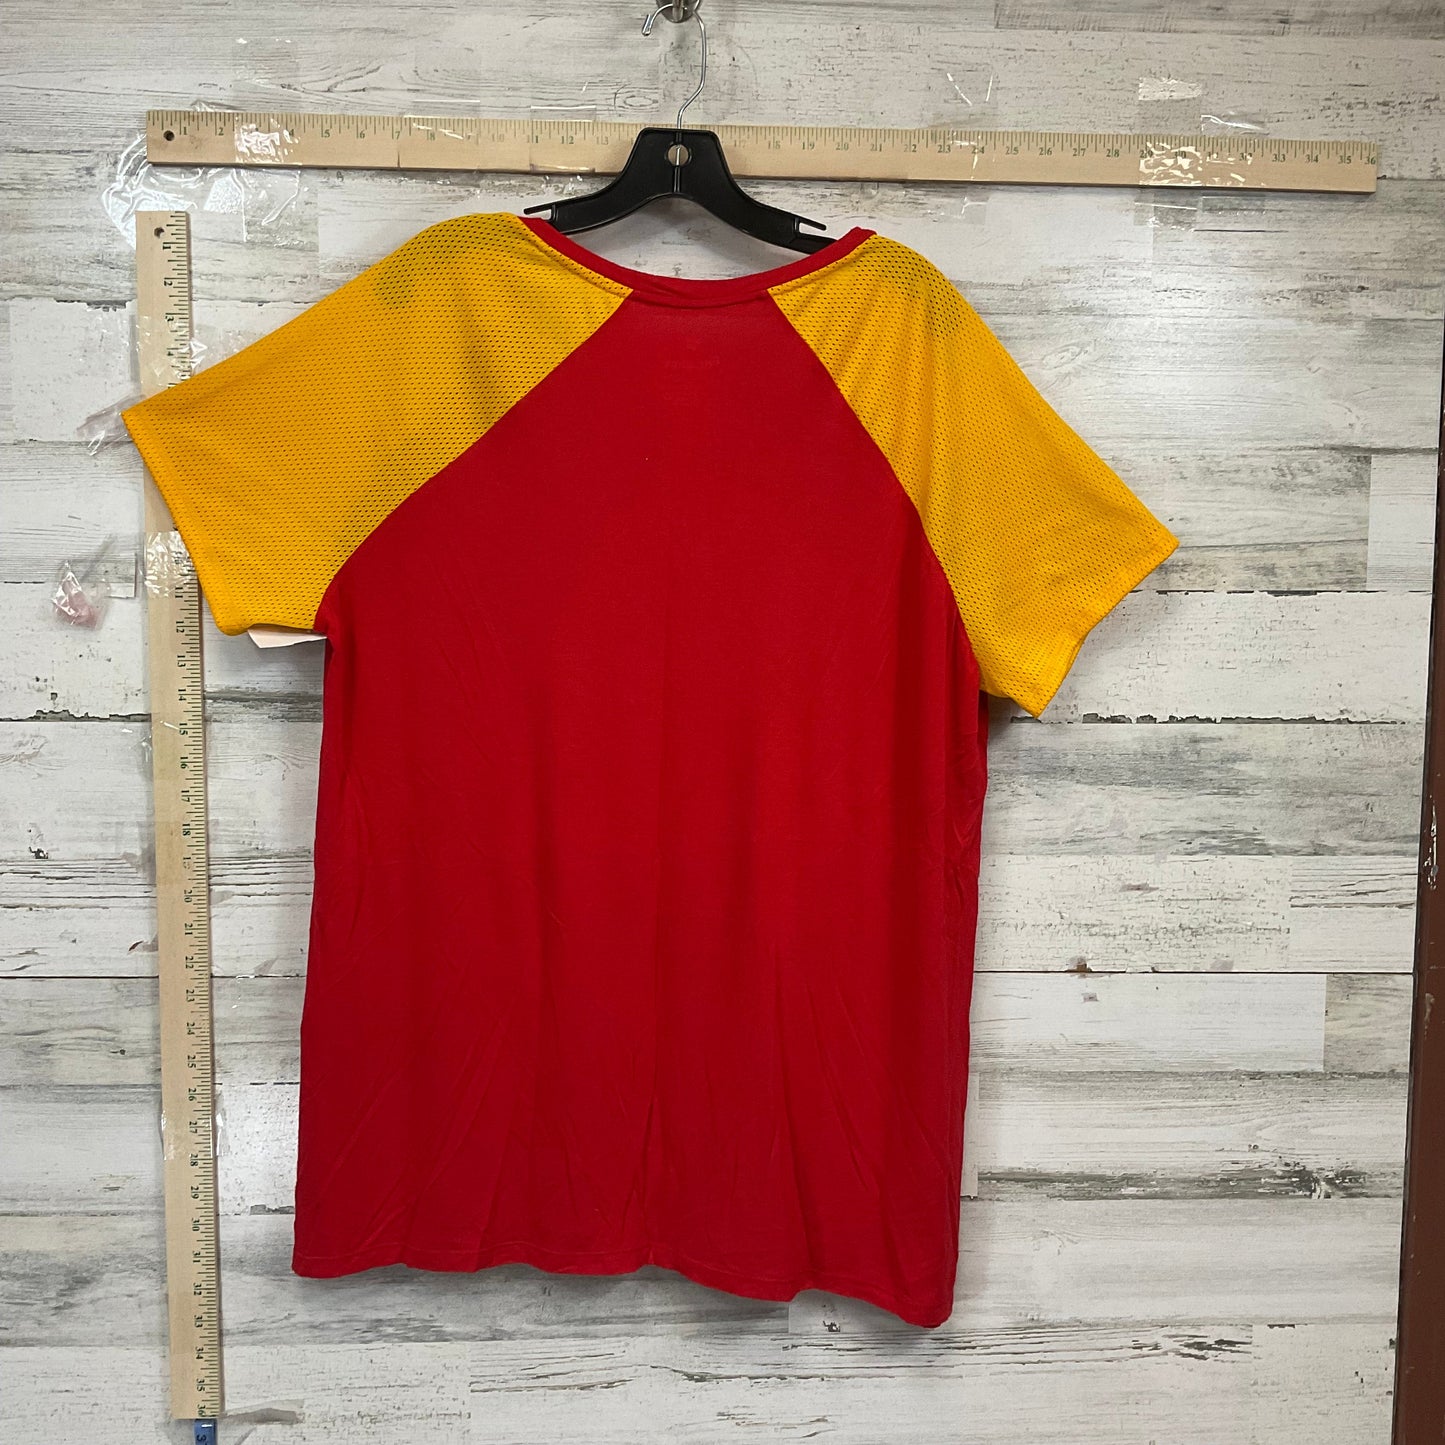 Red & Yellow Top Short Sleeve Fanatics, Size 3x